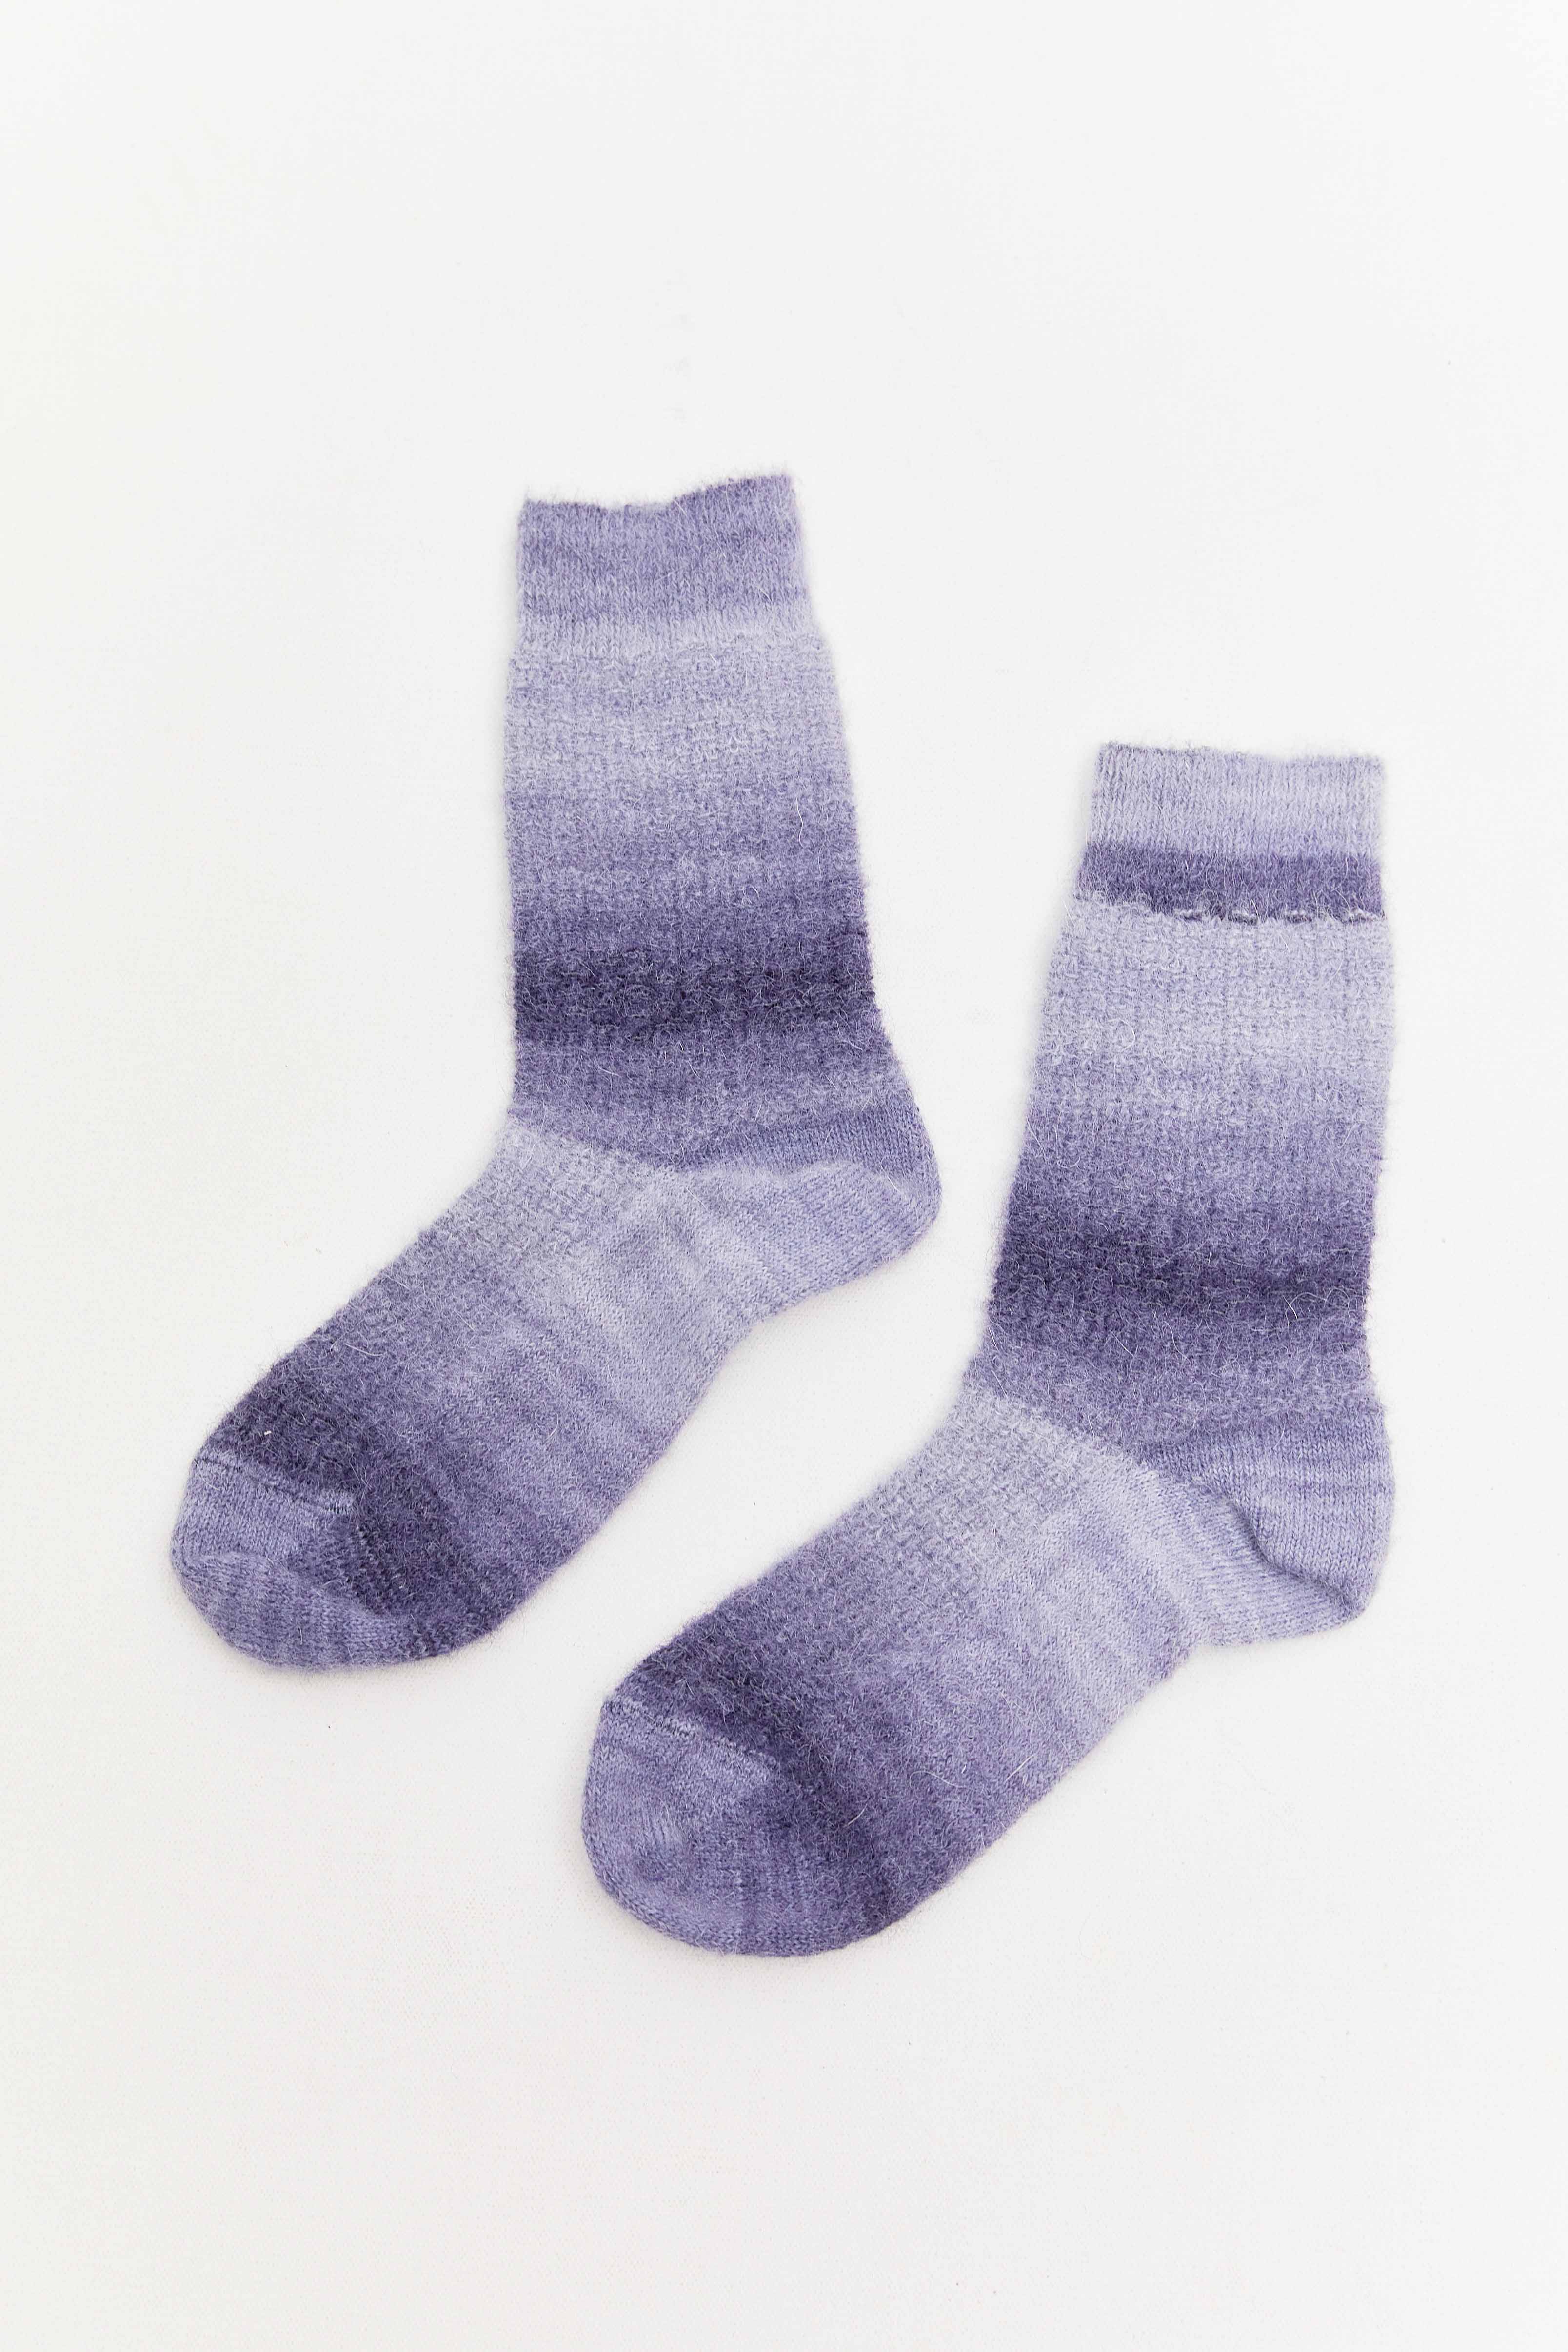 Mohair socks by Maria La Rosa.